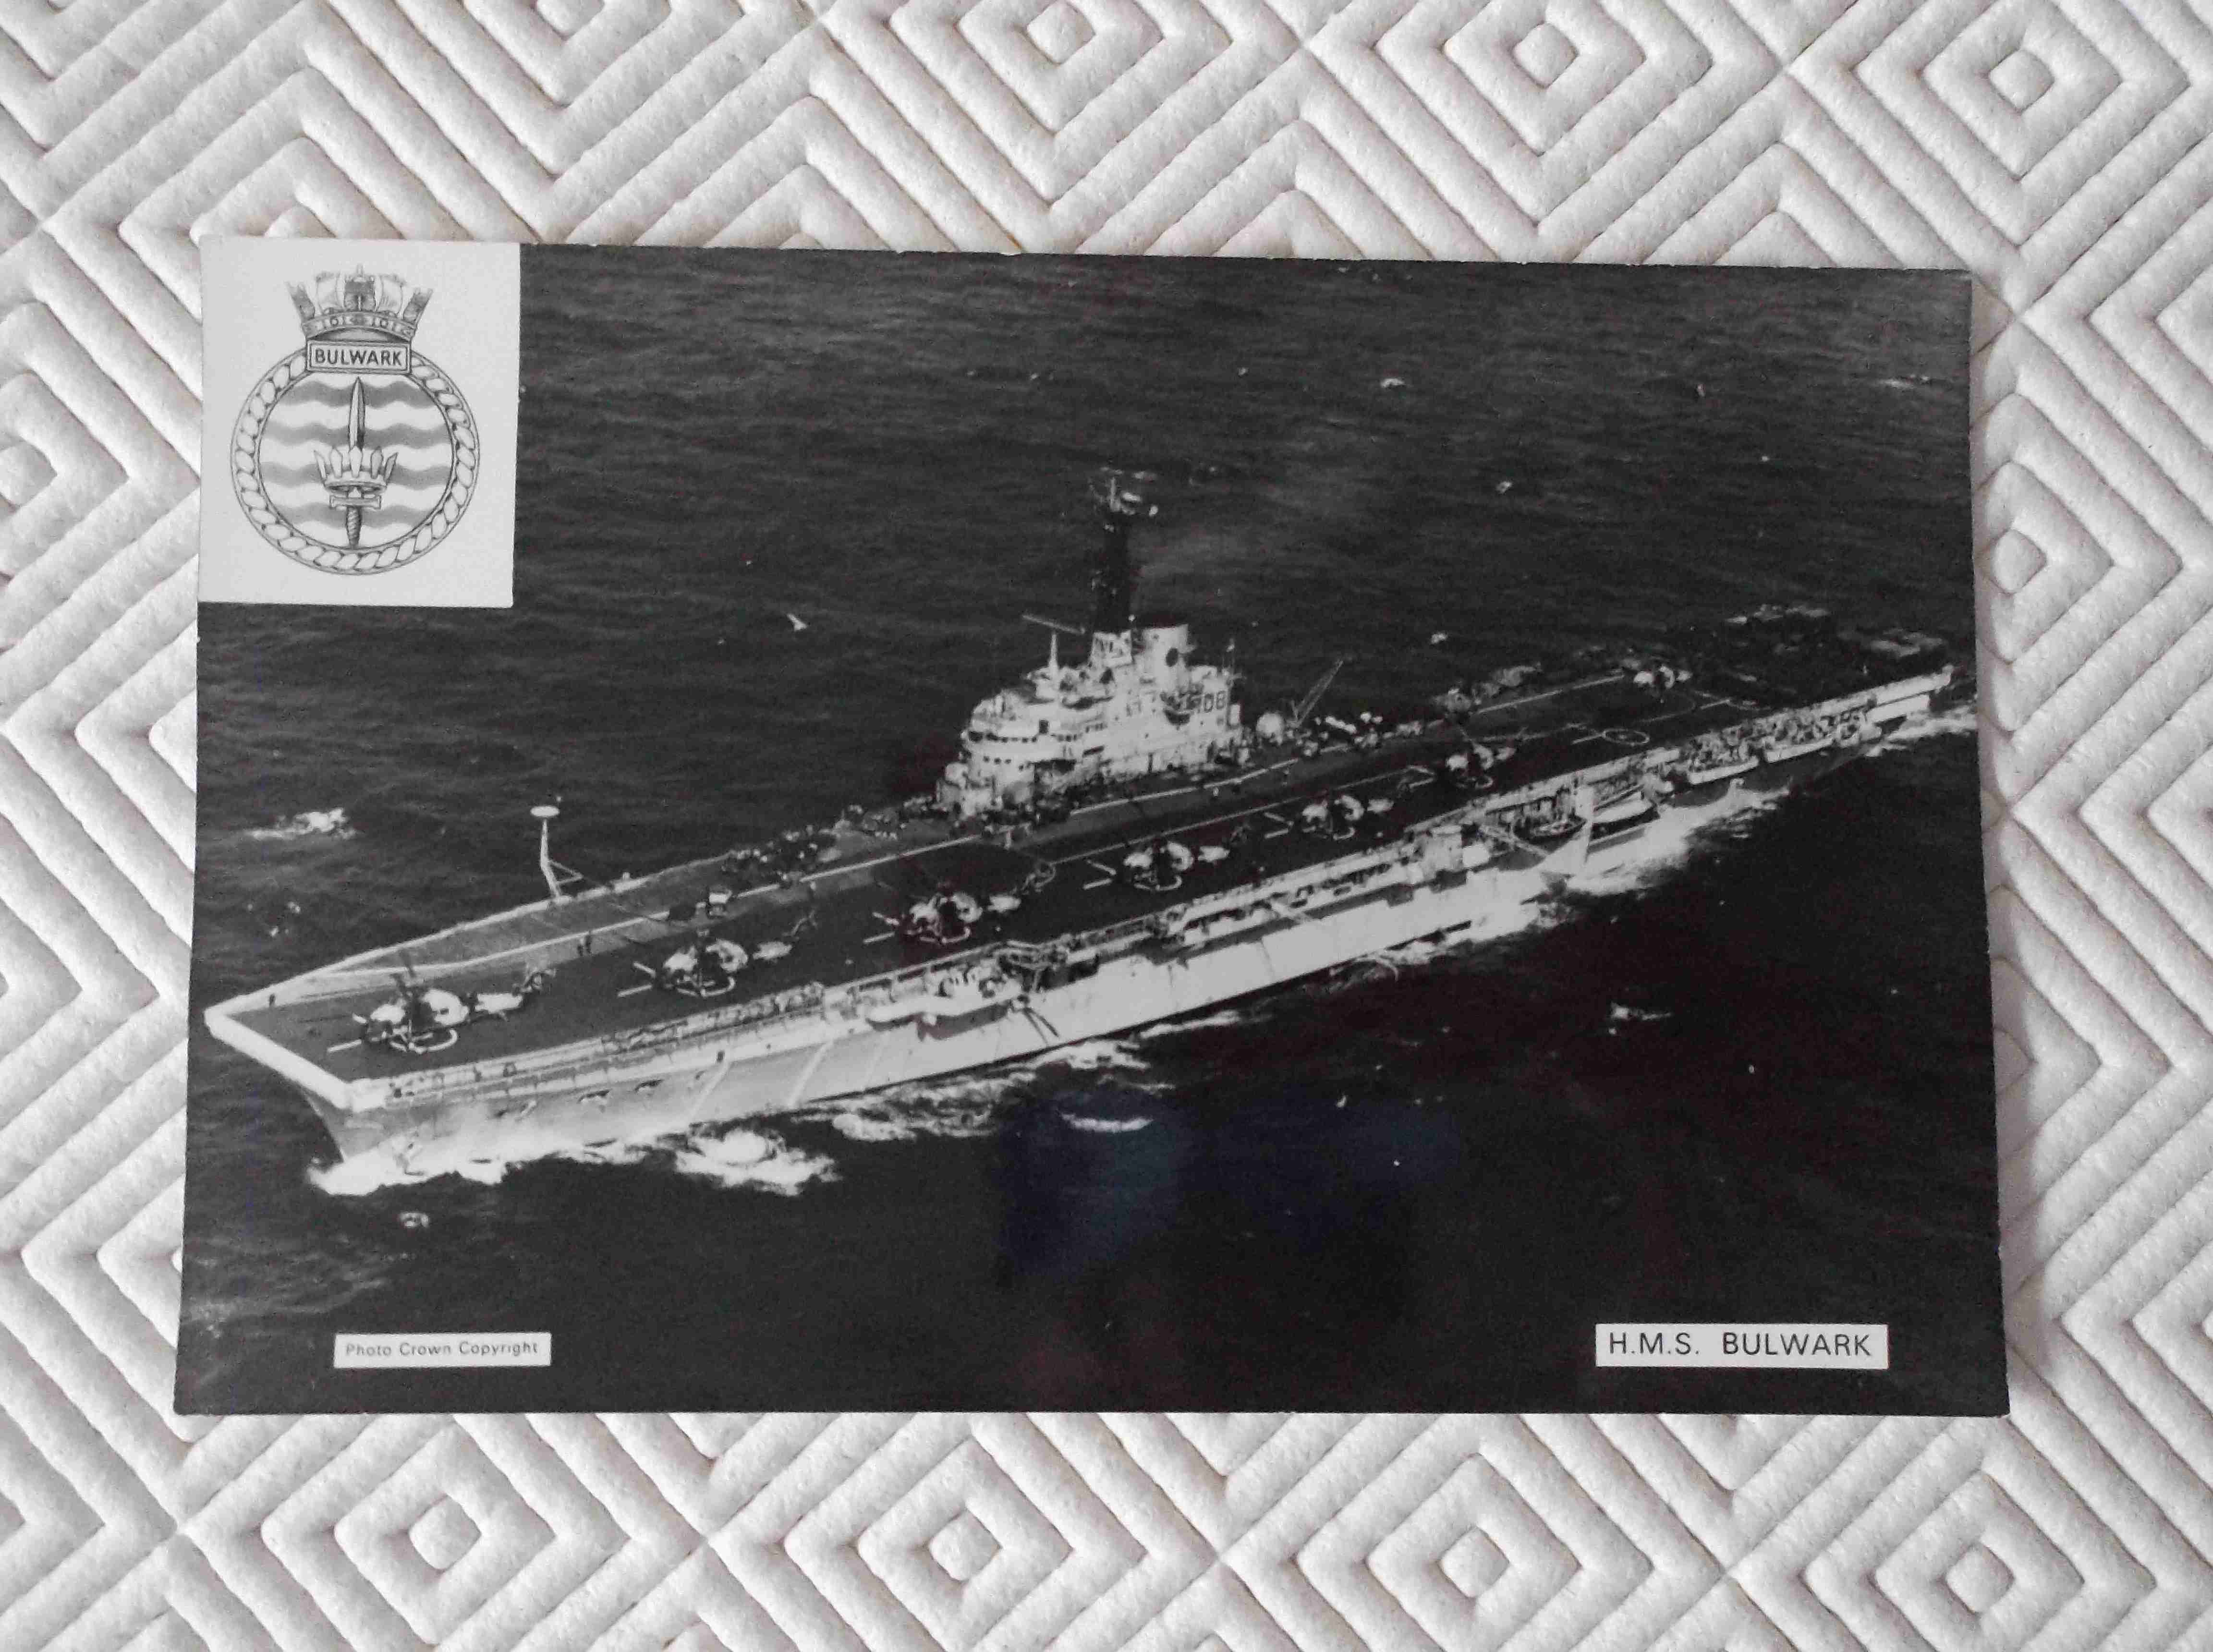 POSTCARD SIZE PHOTOGRAPH OF THE ROYAL NAVAL VESSEL HMS BULWARK